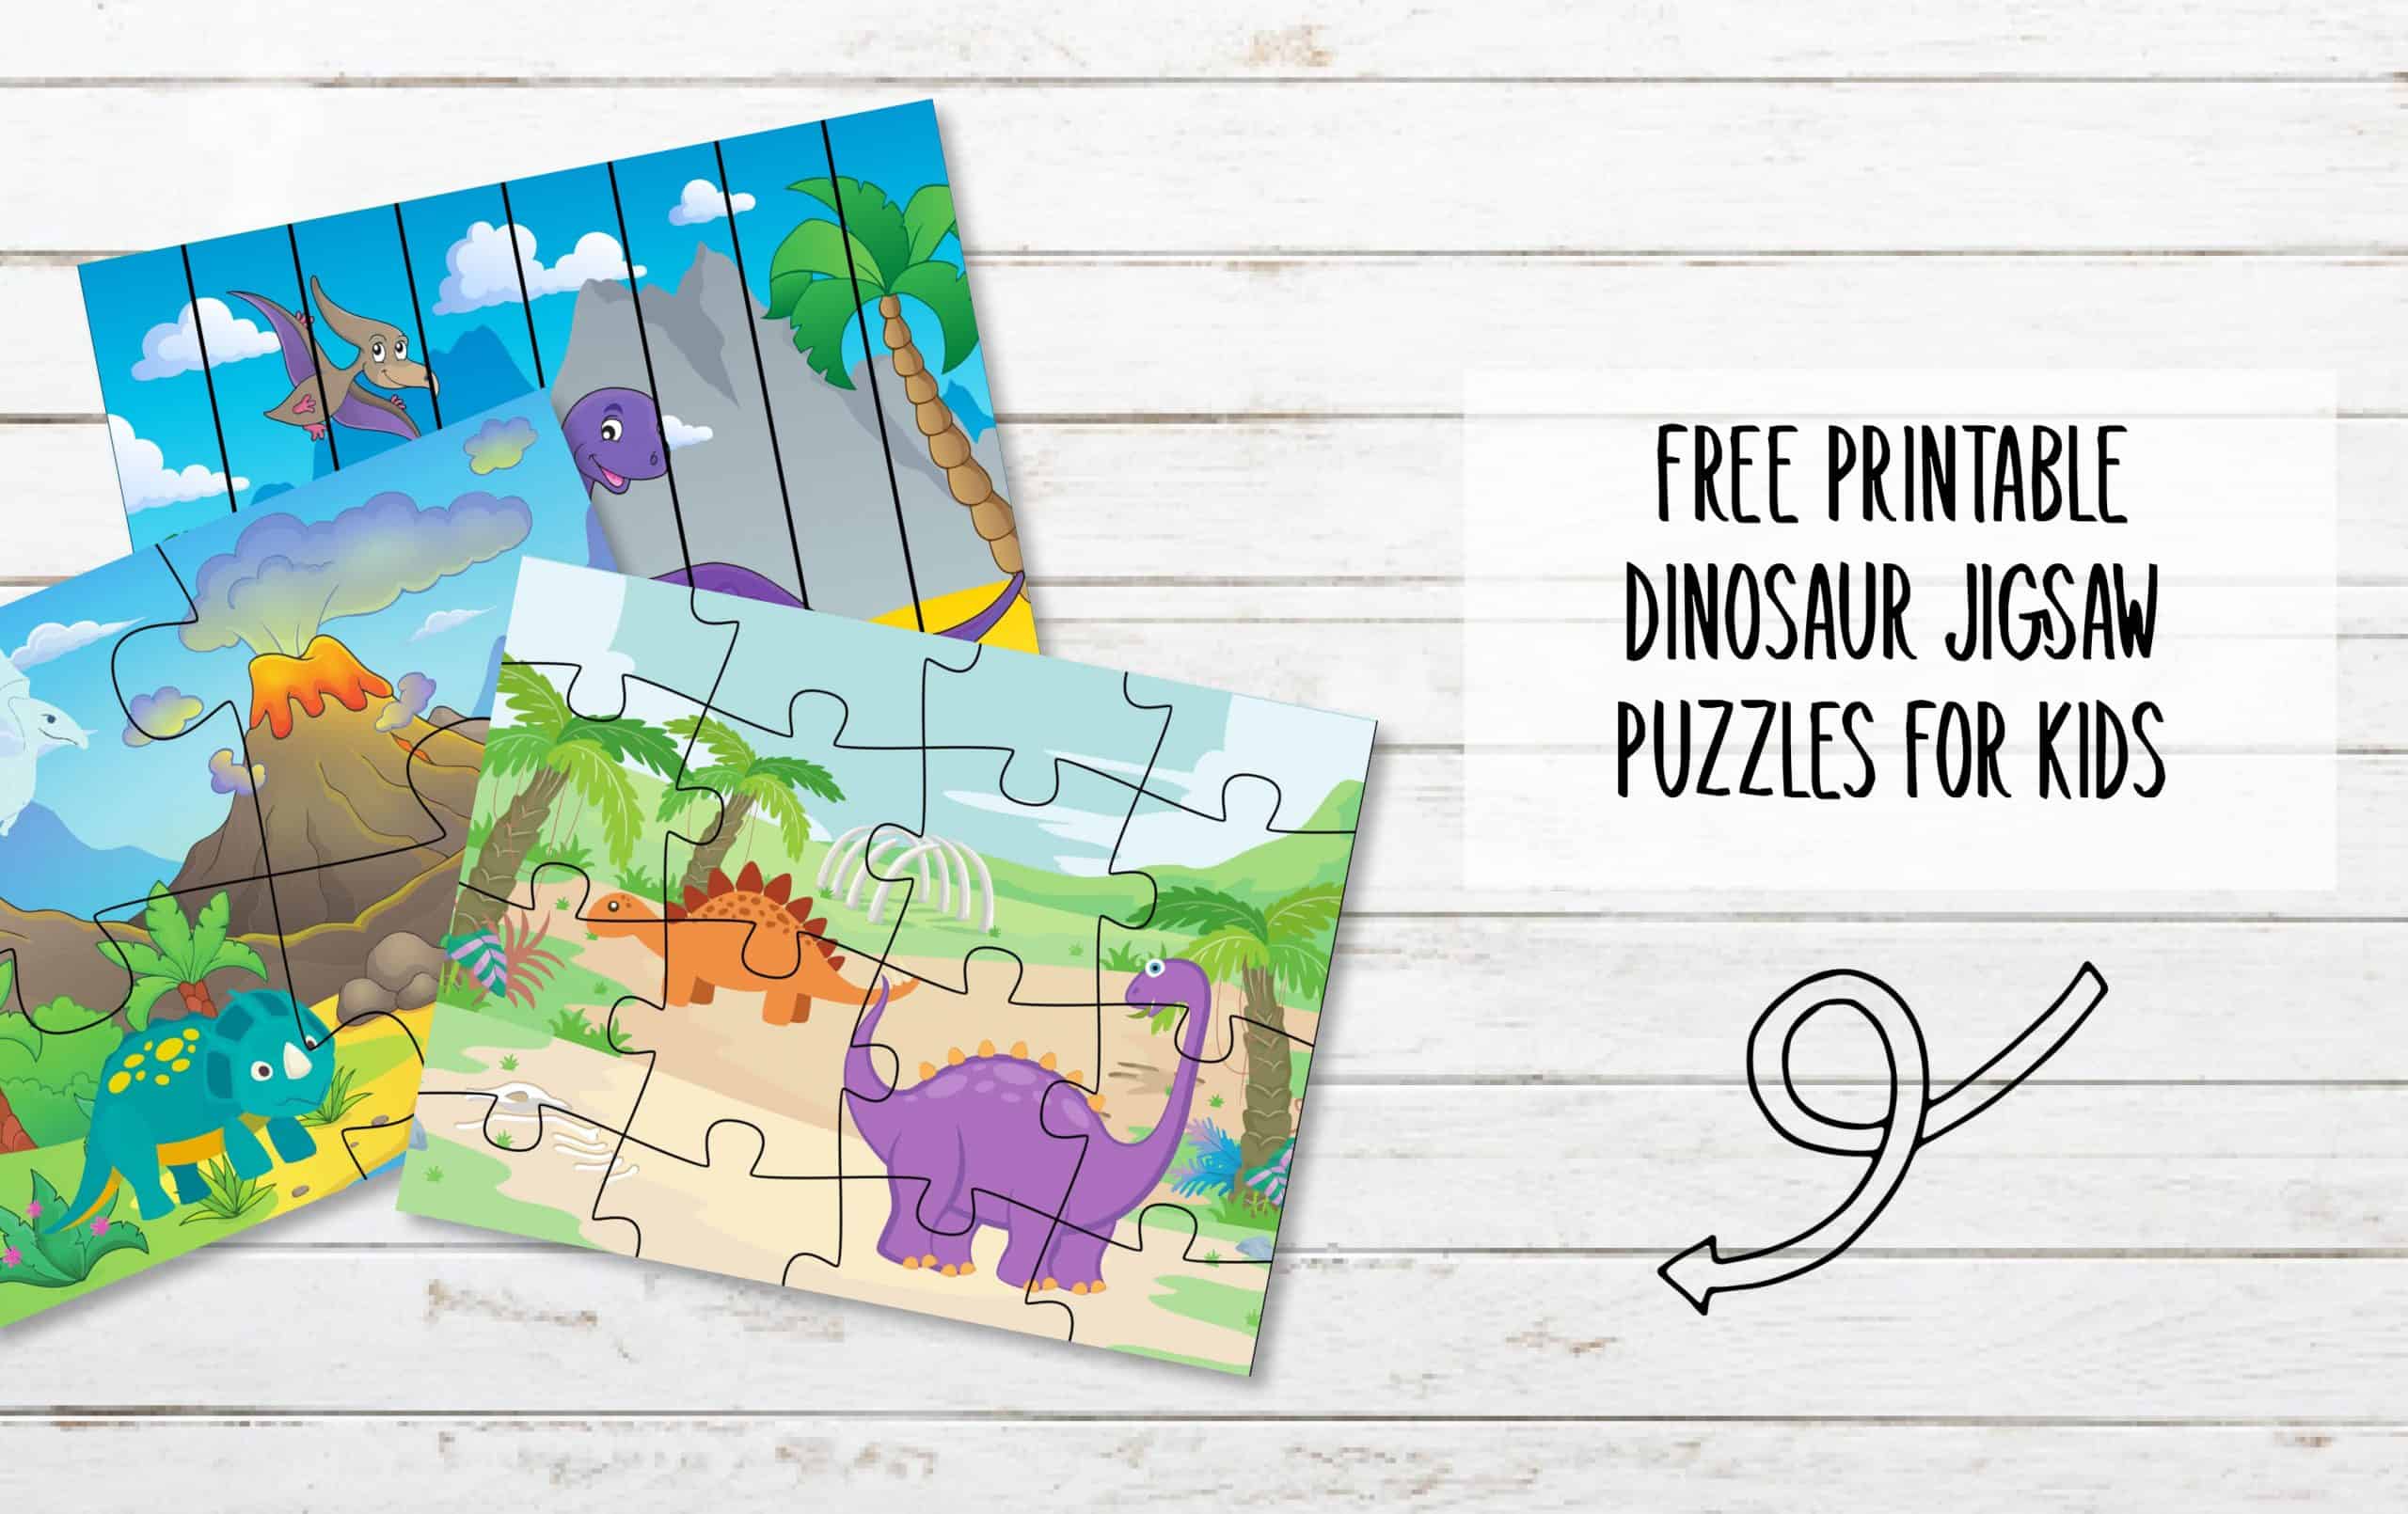 FREE Printable Dinosaur Jigsaw Puzzles for Kids